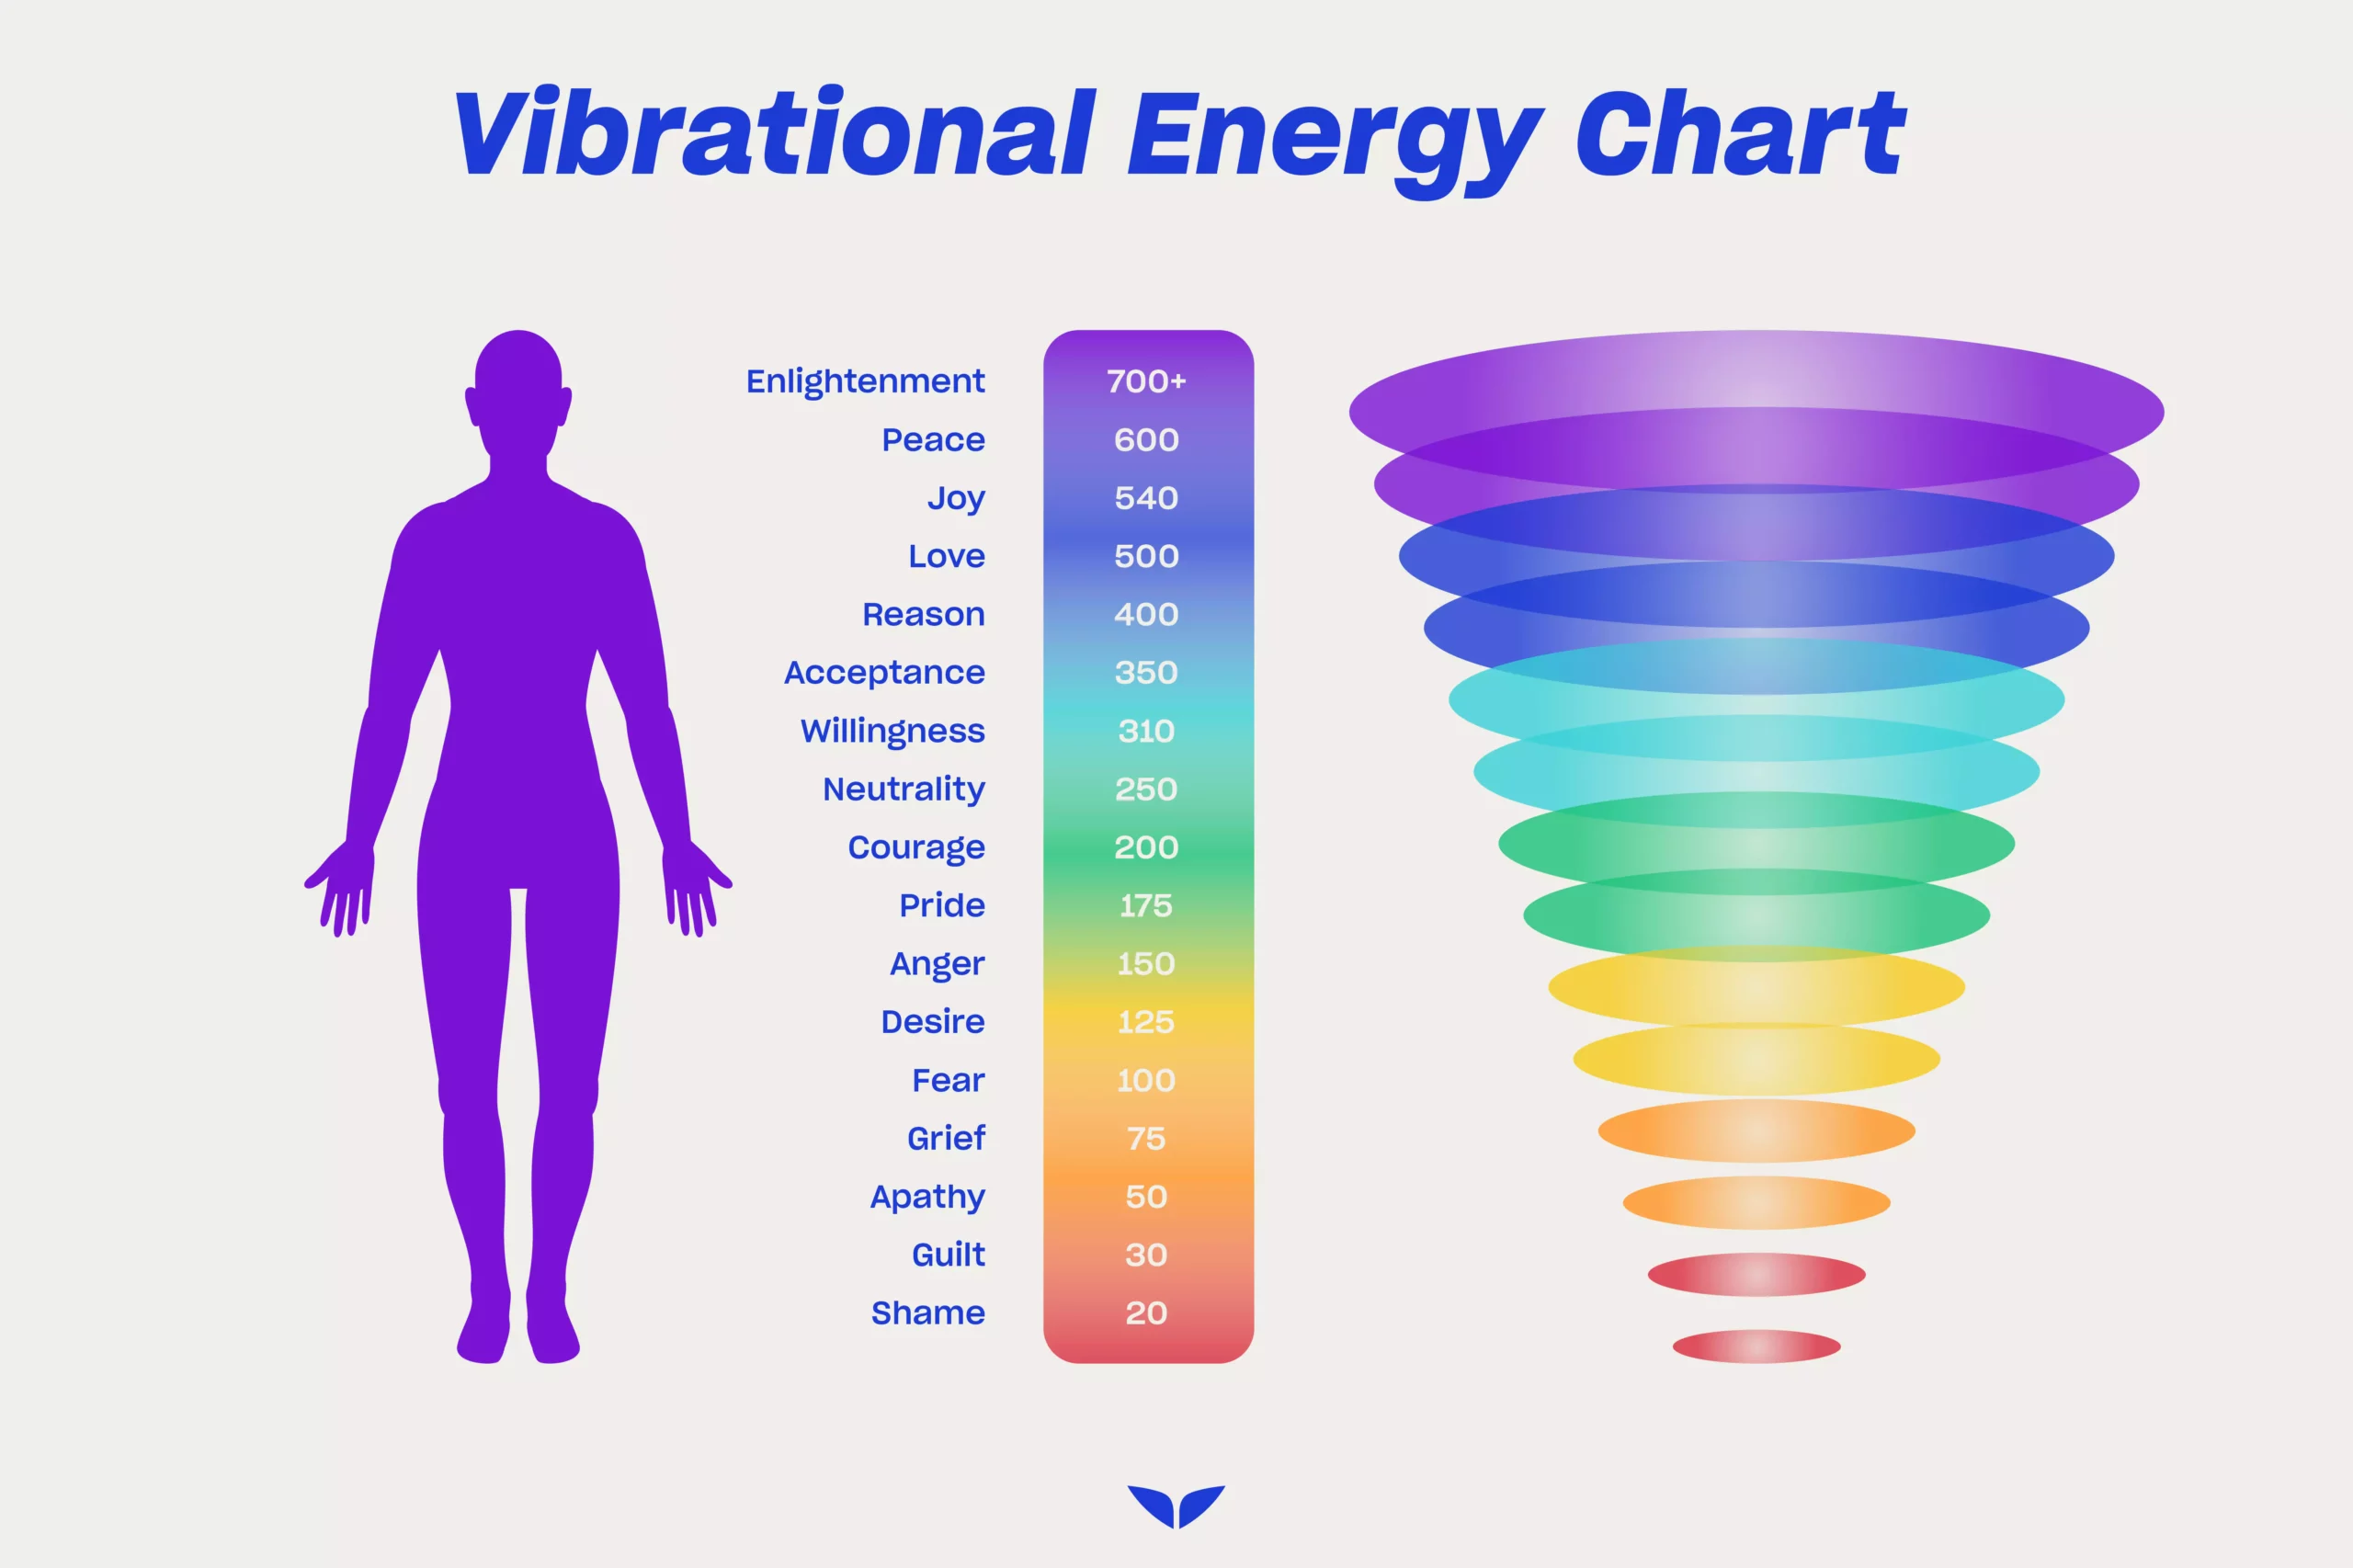 Vibrational energy chart